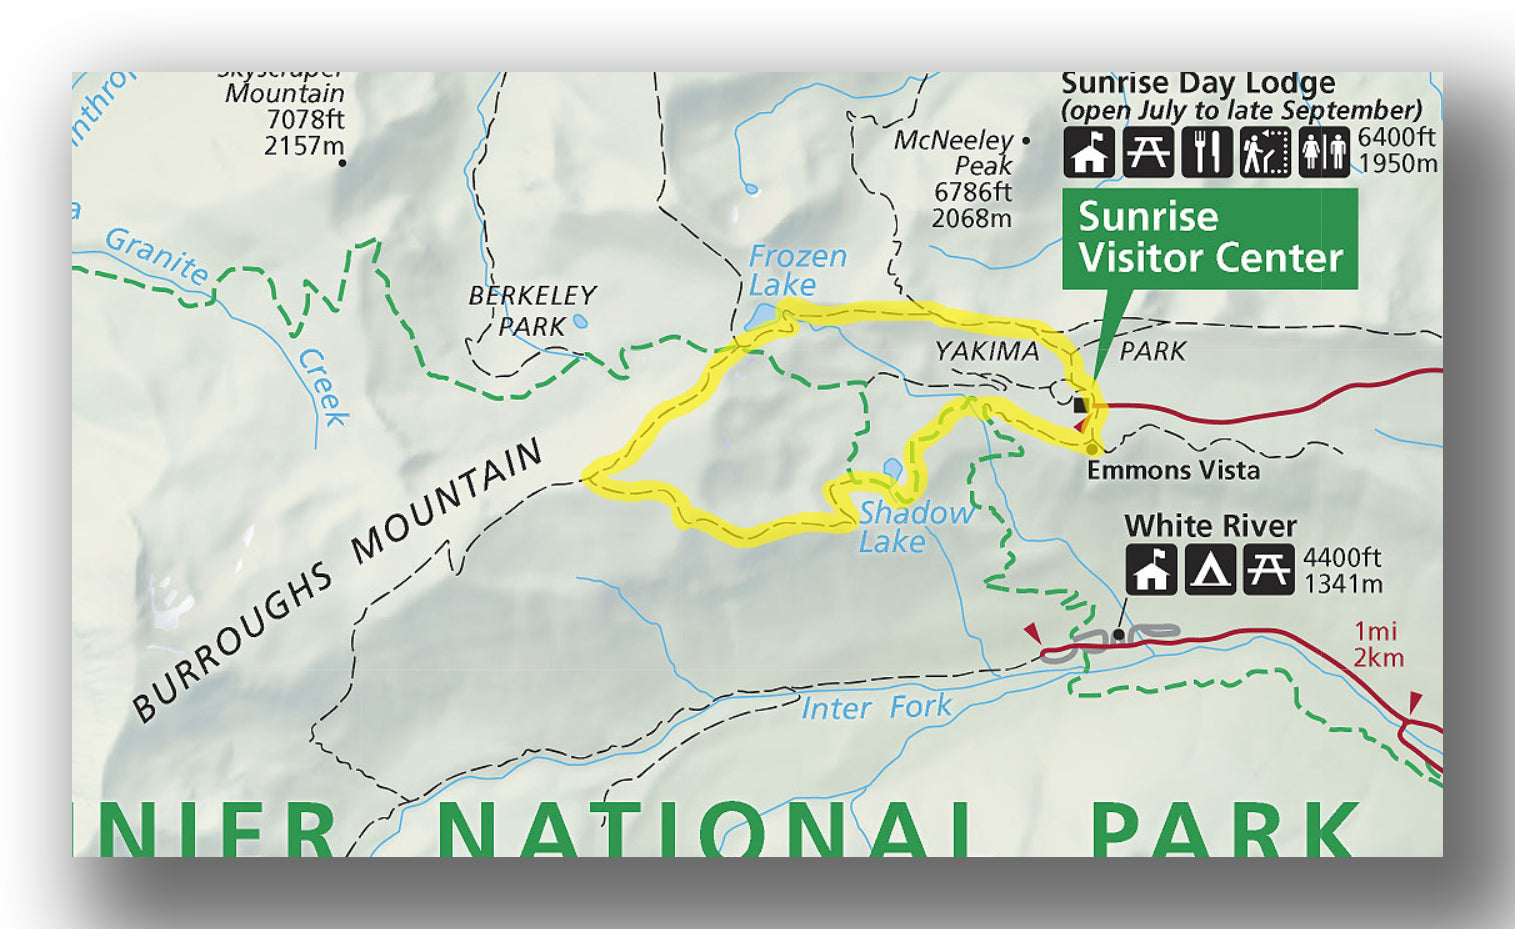 Burroughs Mountain Trail map